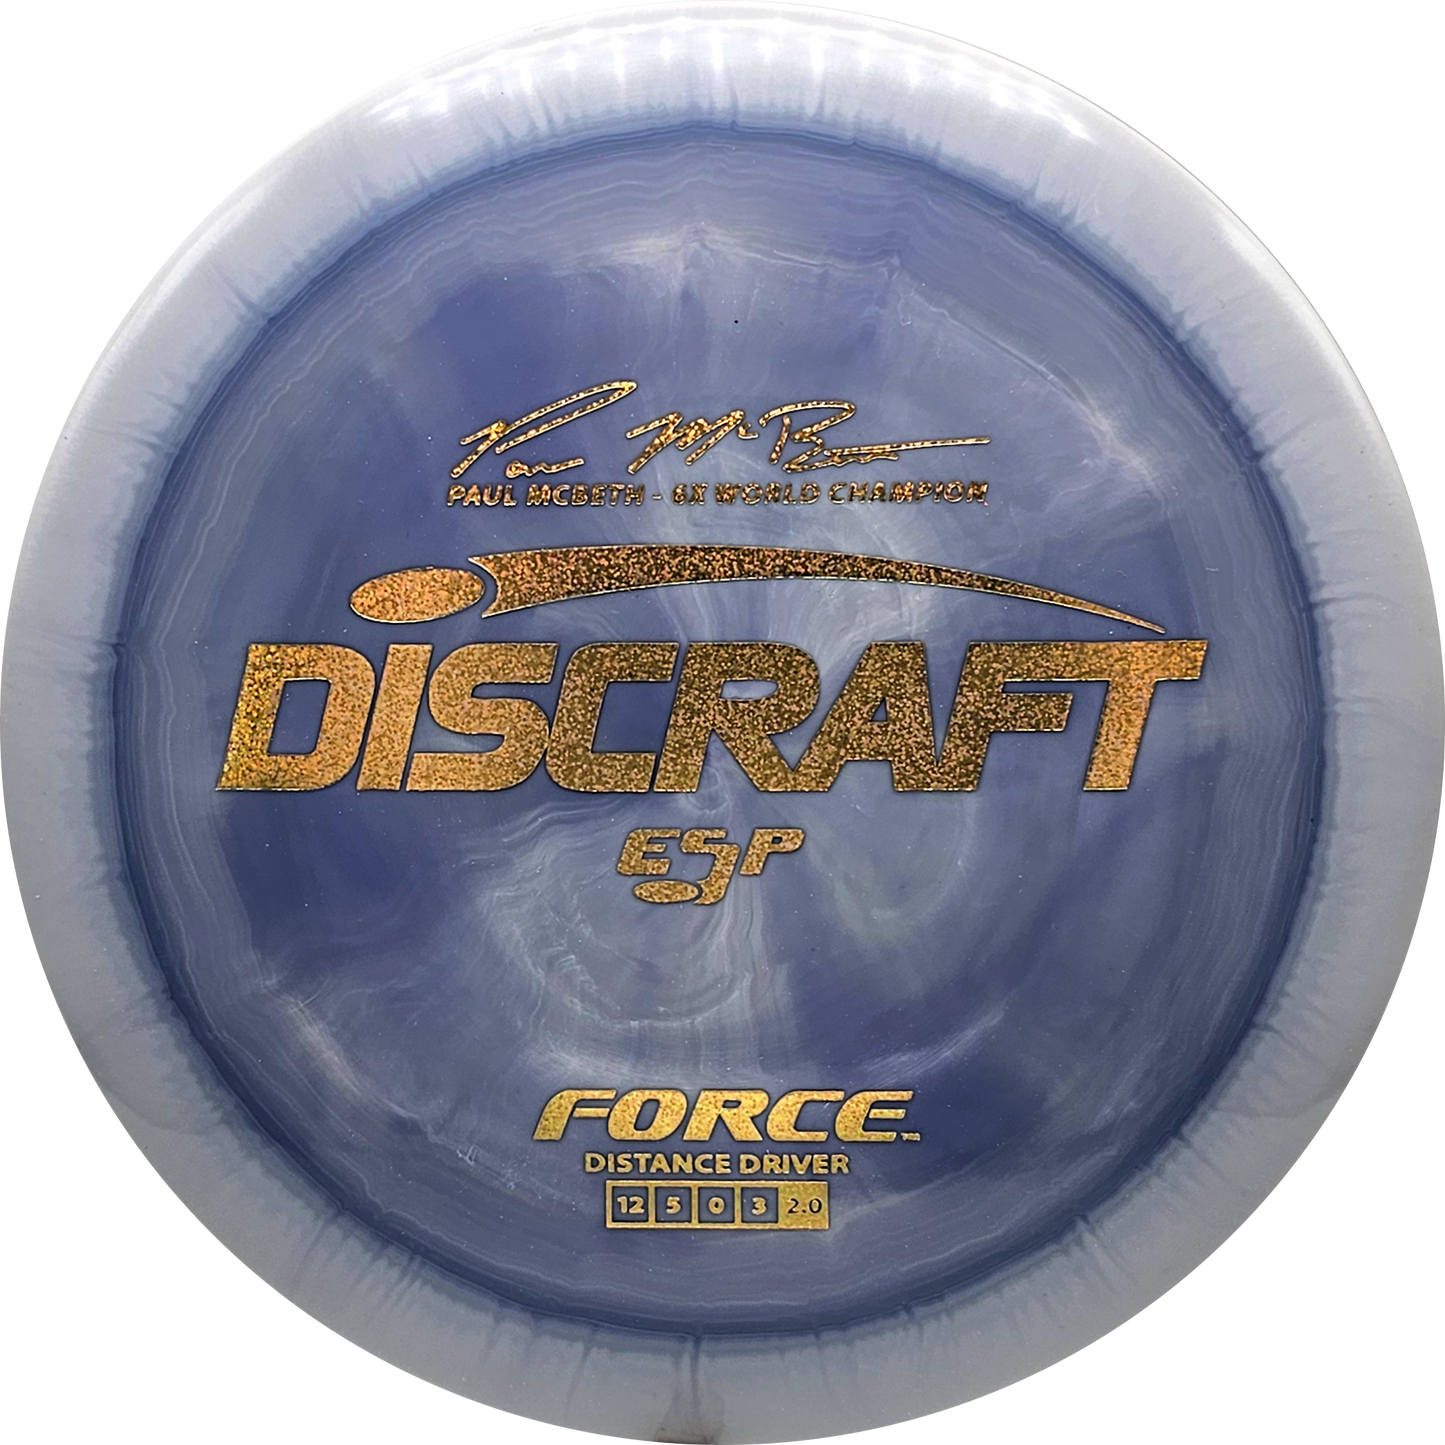 Discraft ESP Force - Paul McBeth 6X Signature Series